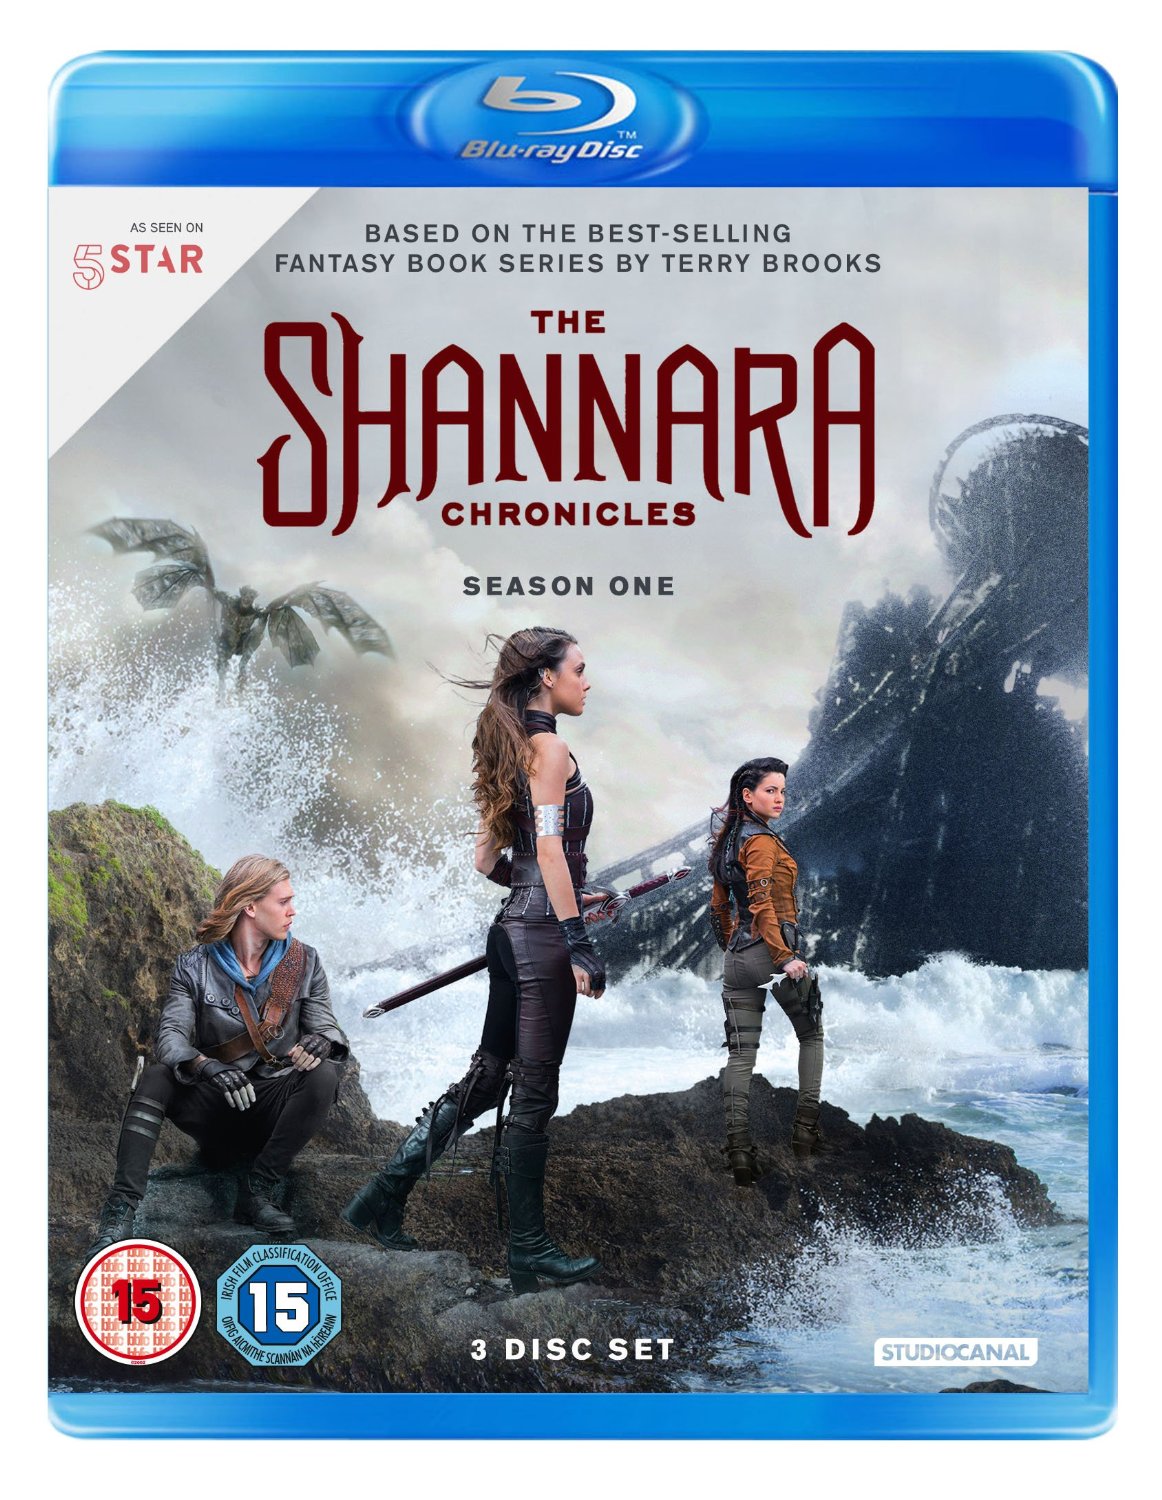 Shannara Chronicles Season 1 Blu-ray review